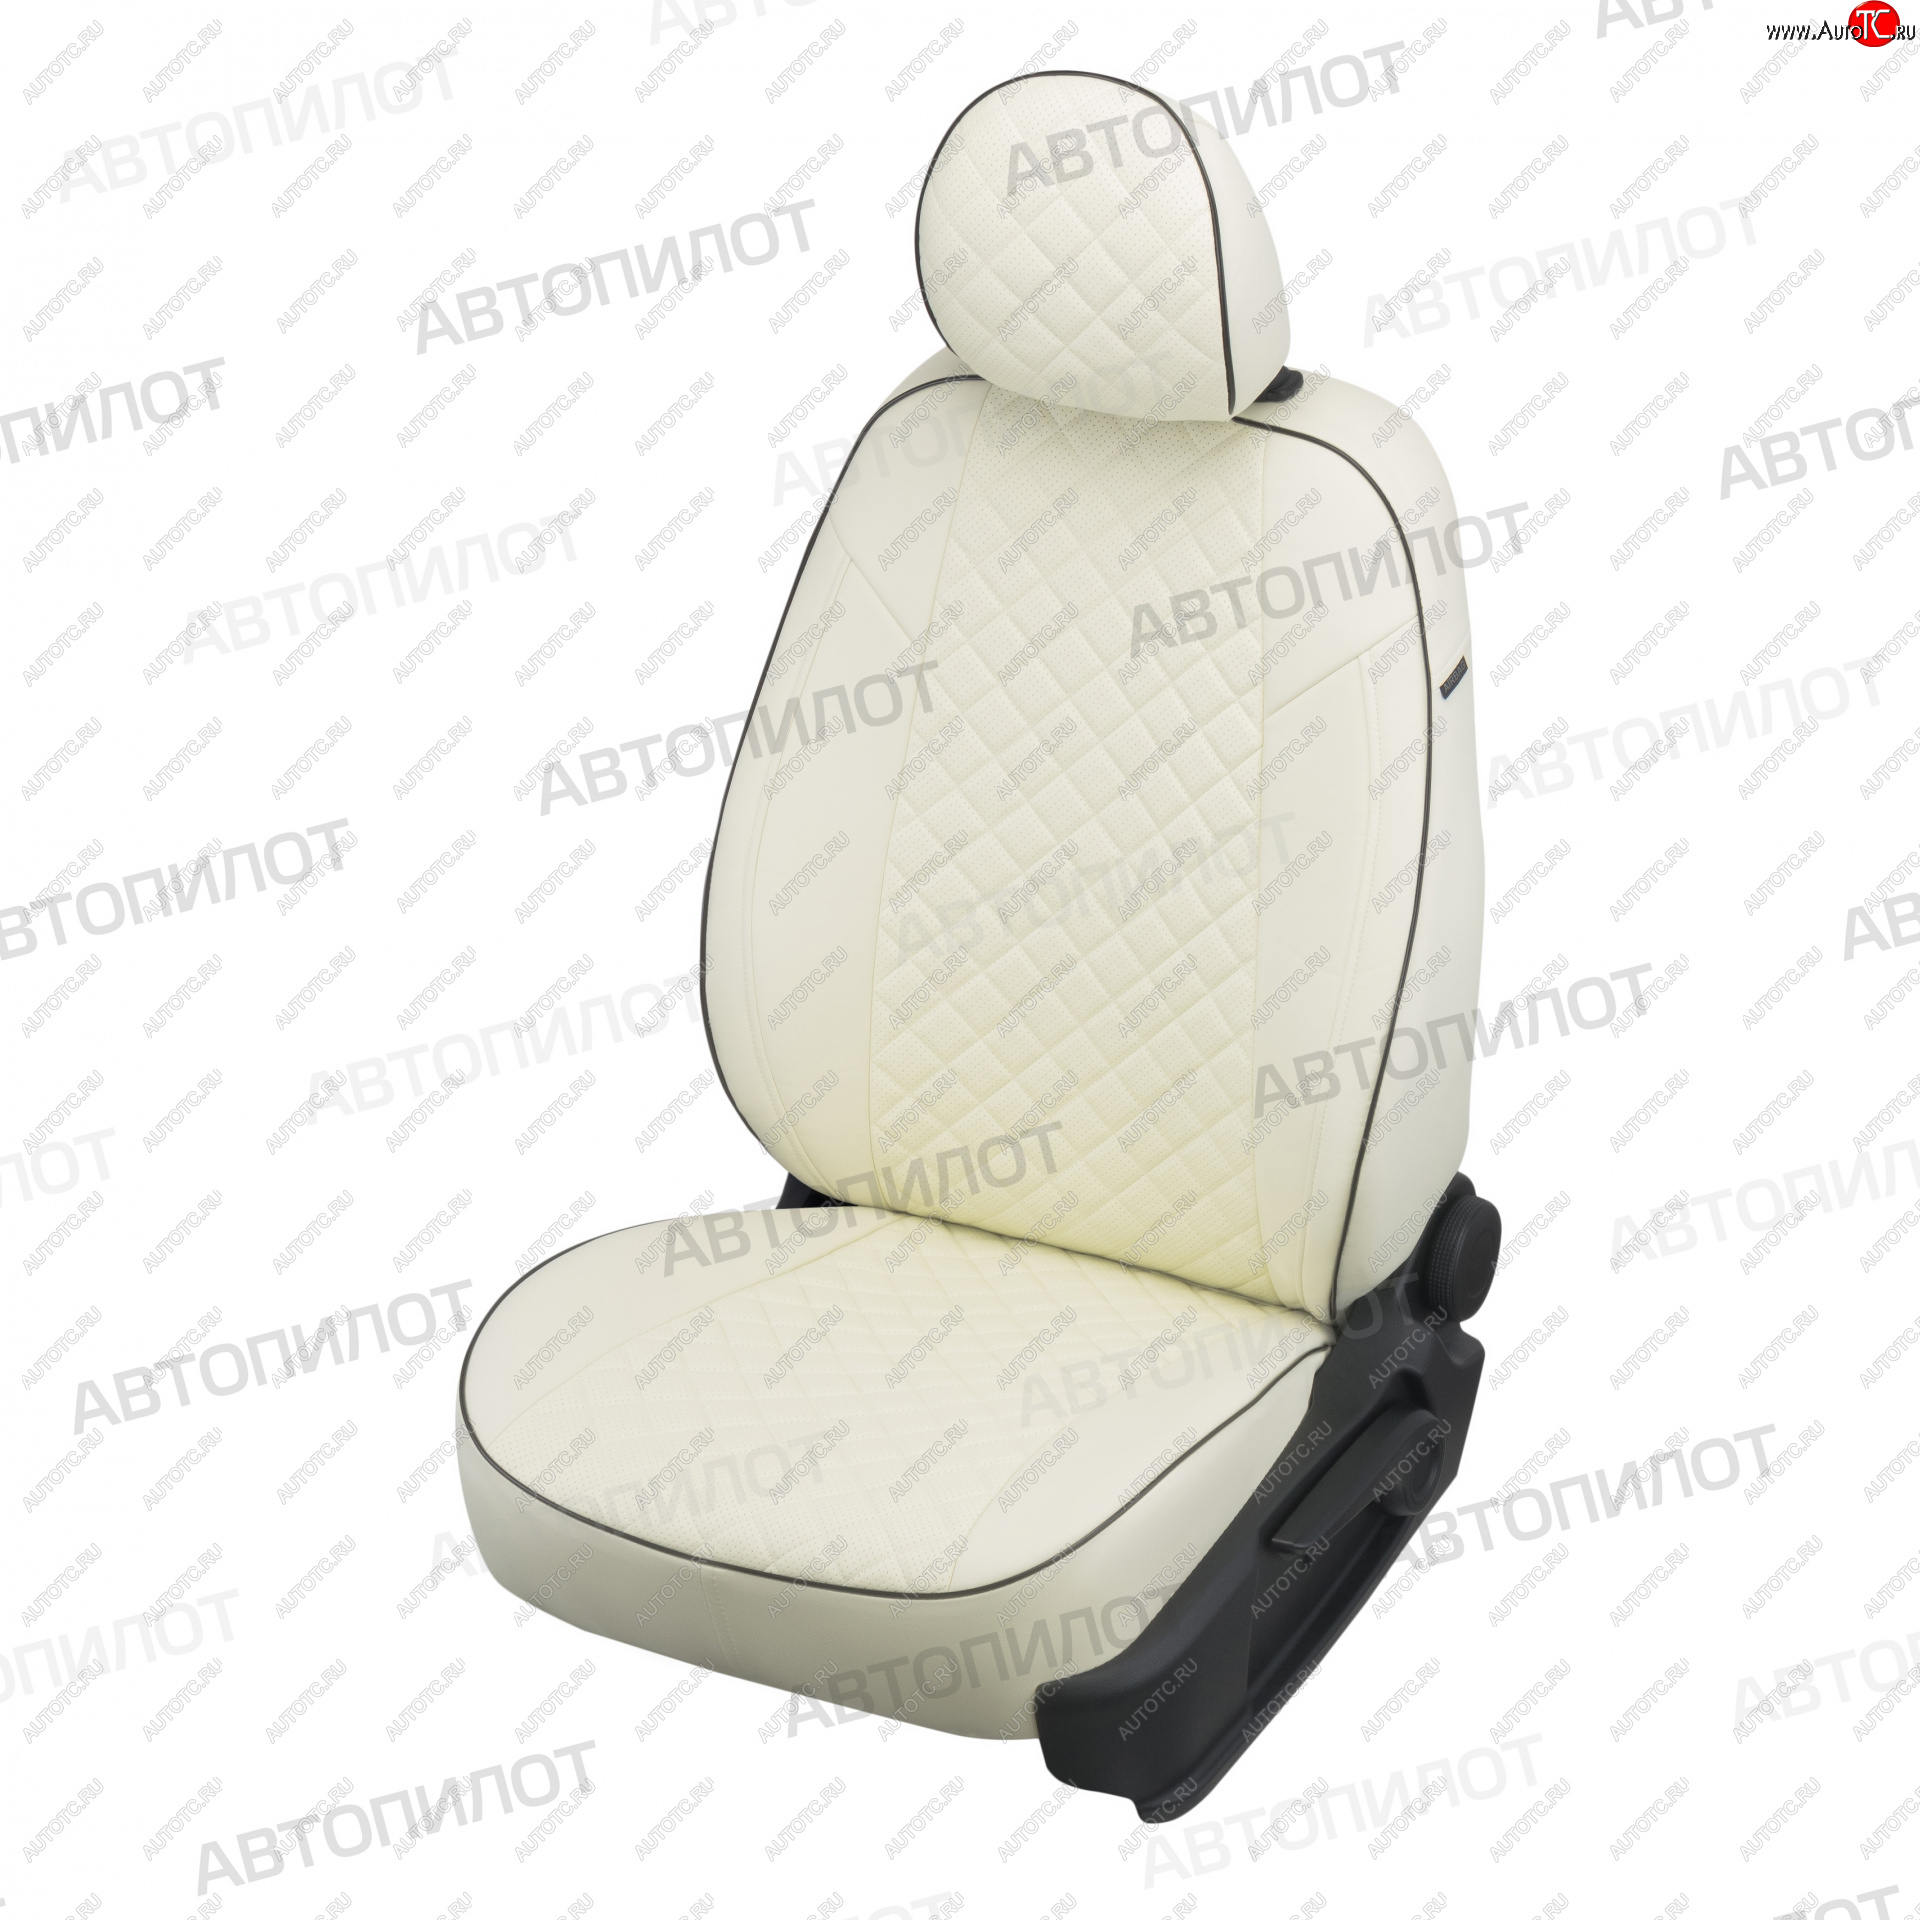 13 999 р. Чехлы сидений (экокожа) Автопилот Ромб  Honda CR-V  RD4,RD5,RD6,RD7,RD9  (2001-2006) (белый)